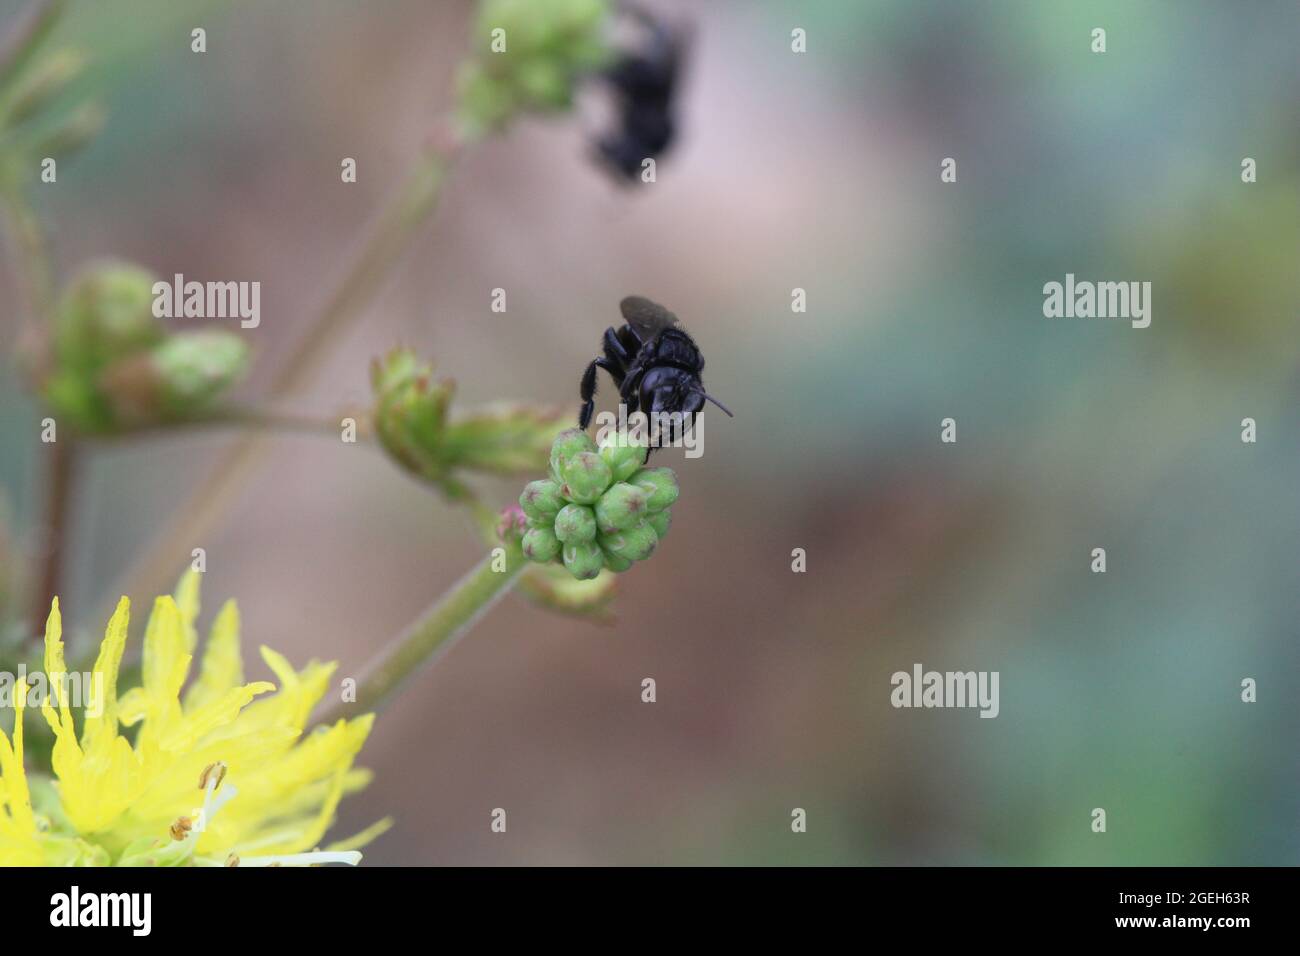 Closeup shot of black bugs on yellow dandelion flowers Stock Photo